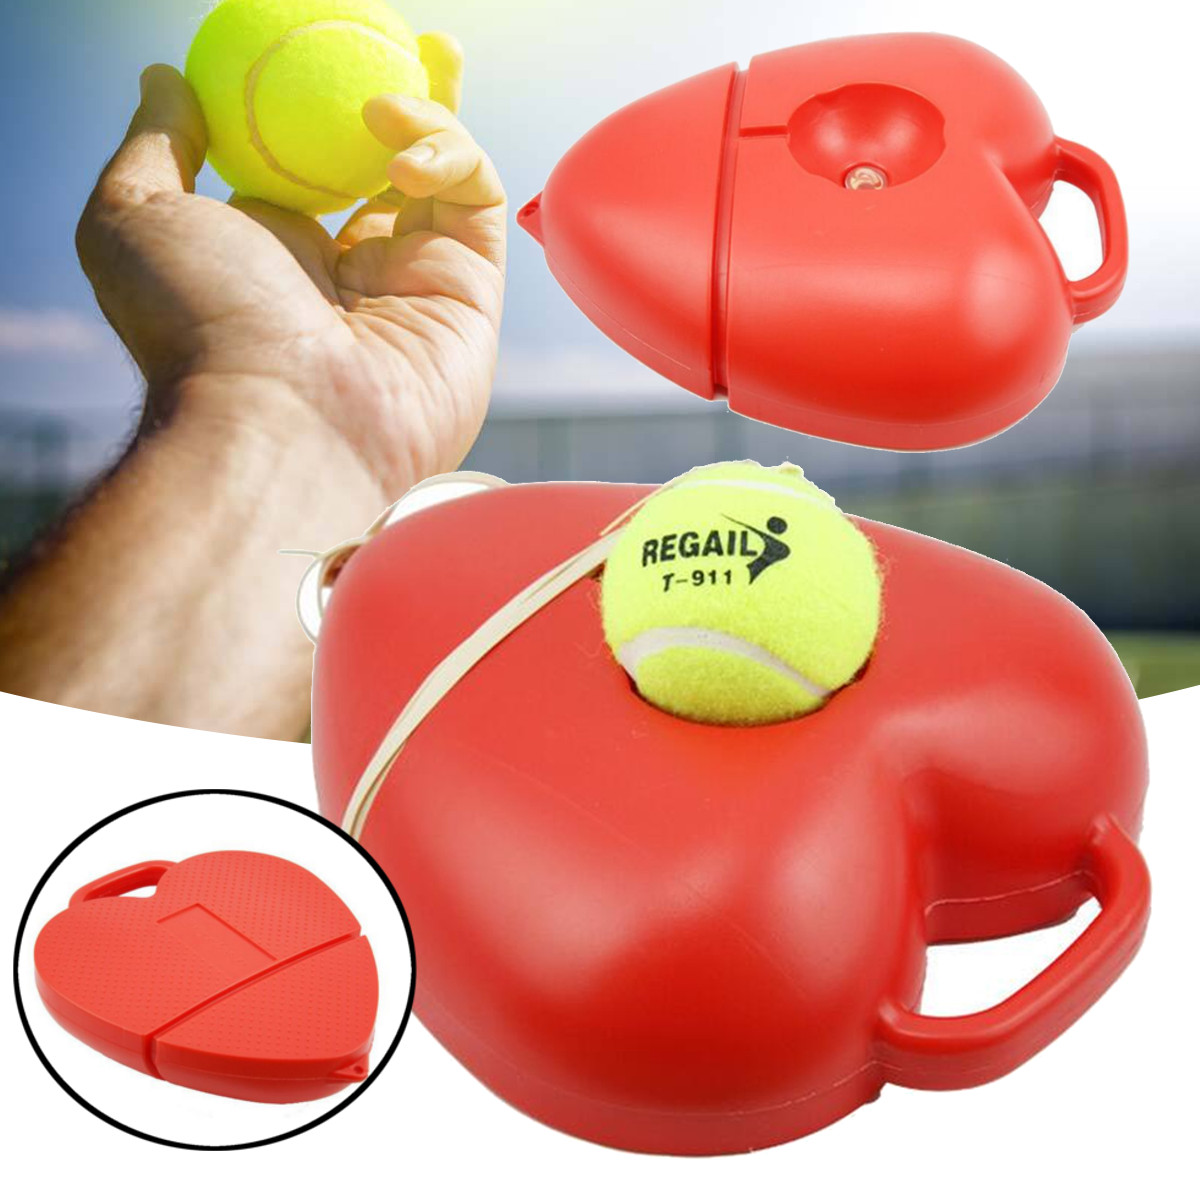 Singles-Tennis-Balls-Sports-Trainer-Self-Study-Practice-Training-Rebound-Balls-Baseboard-Tool-1310644